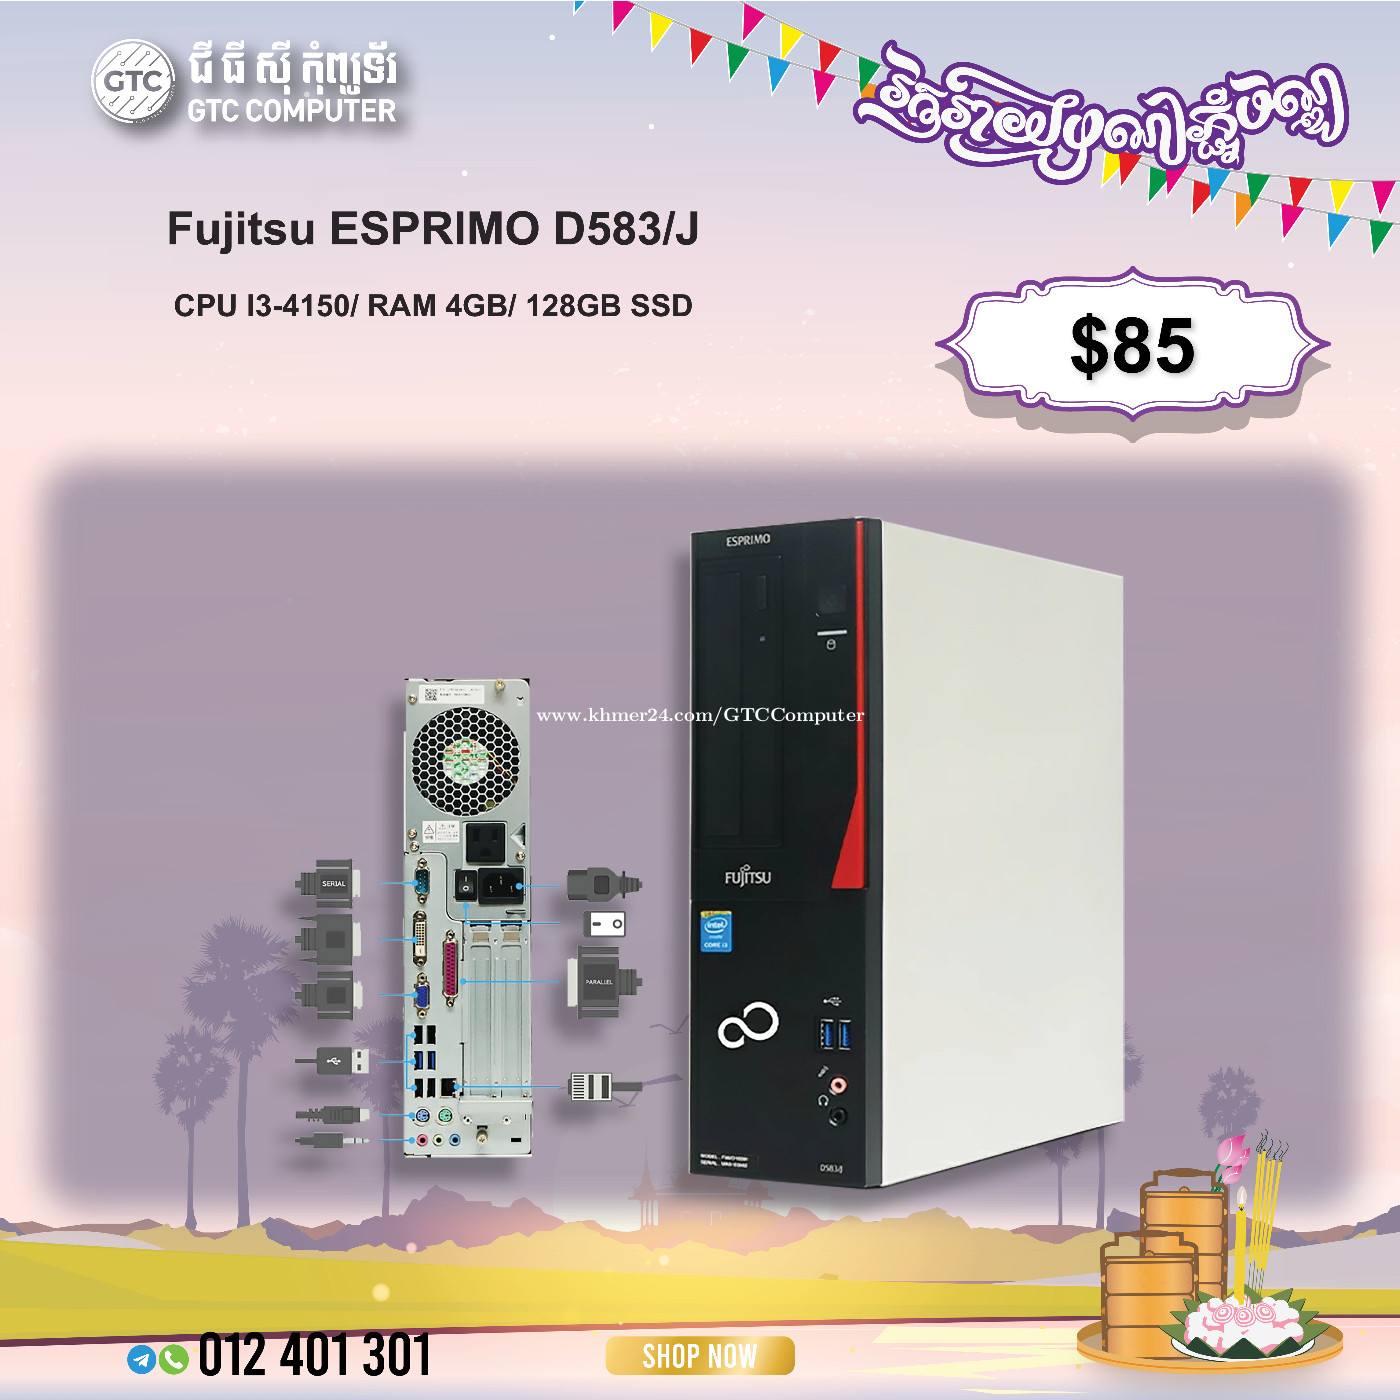 Fujitsu ESPRIMO D583/J Price $85.00 in Veal Vong, Cambodia - GTC